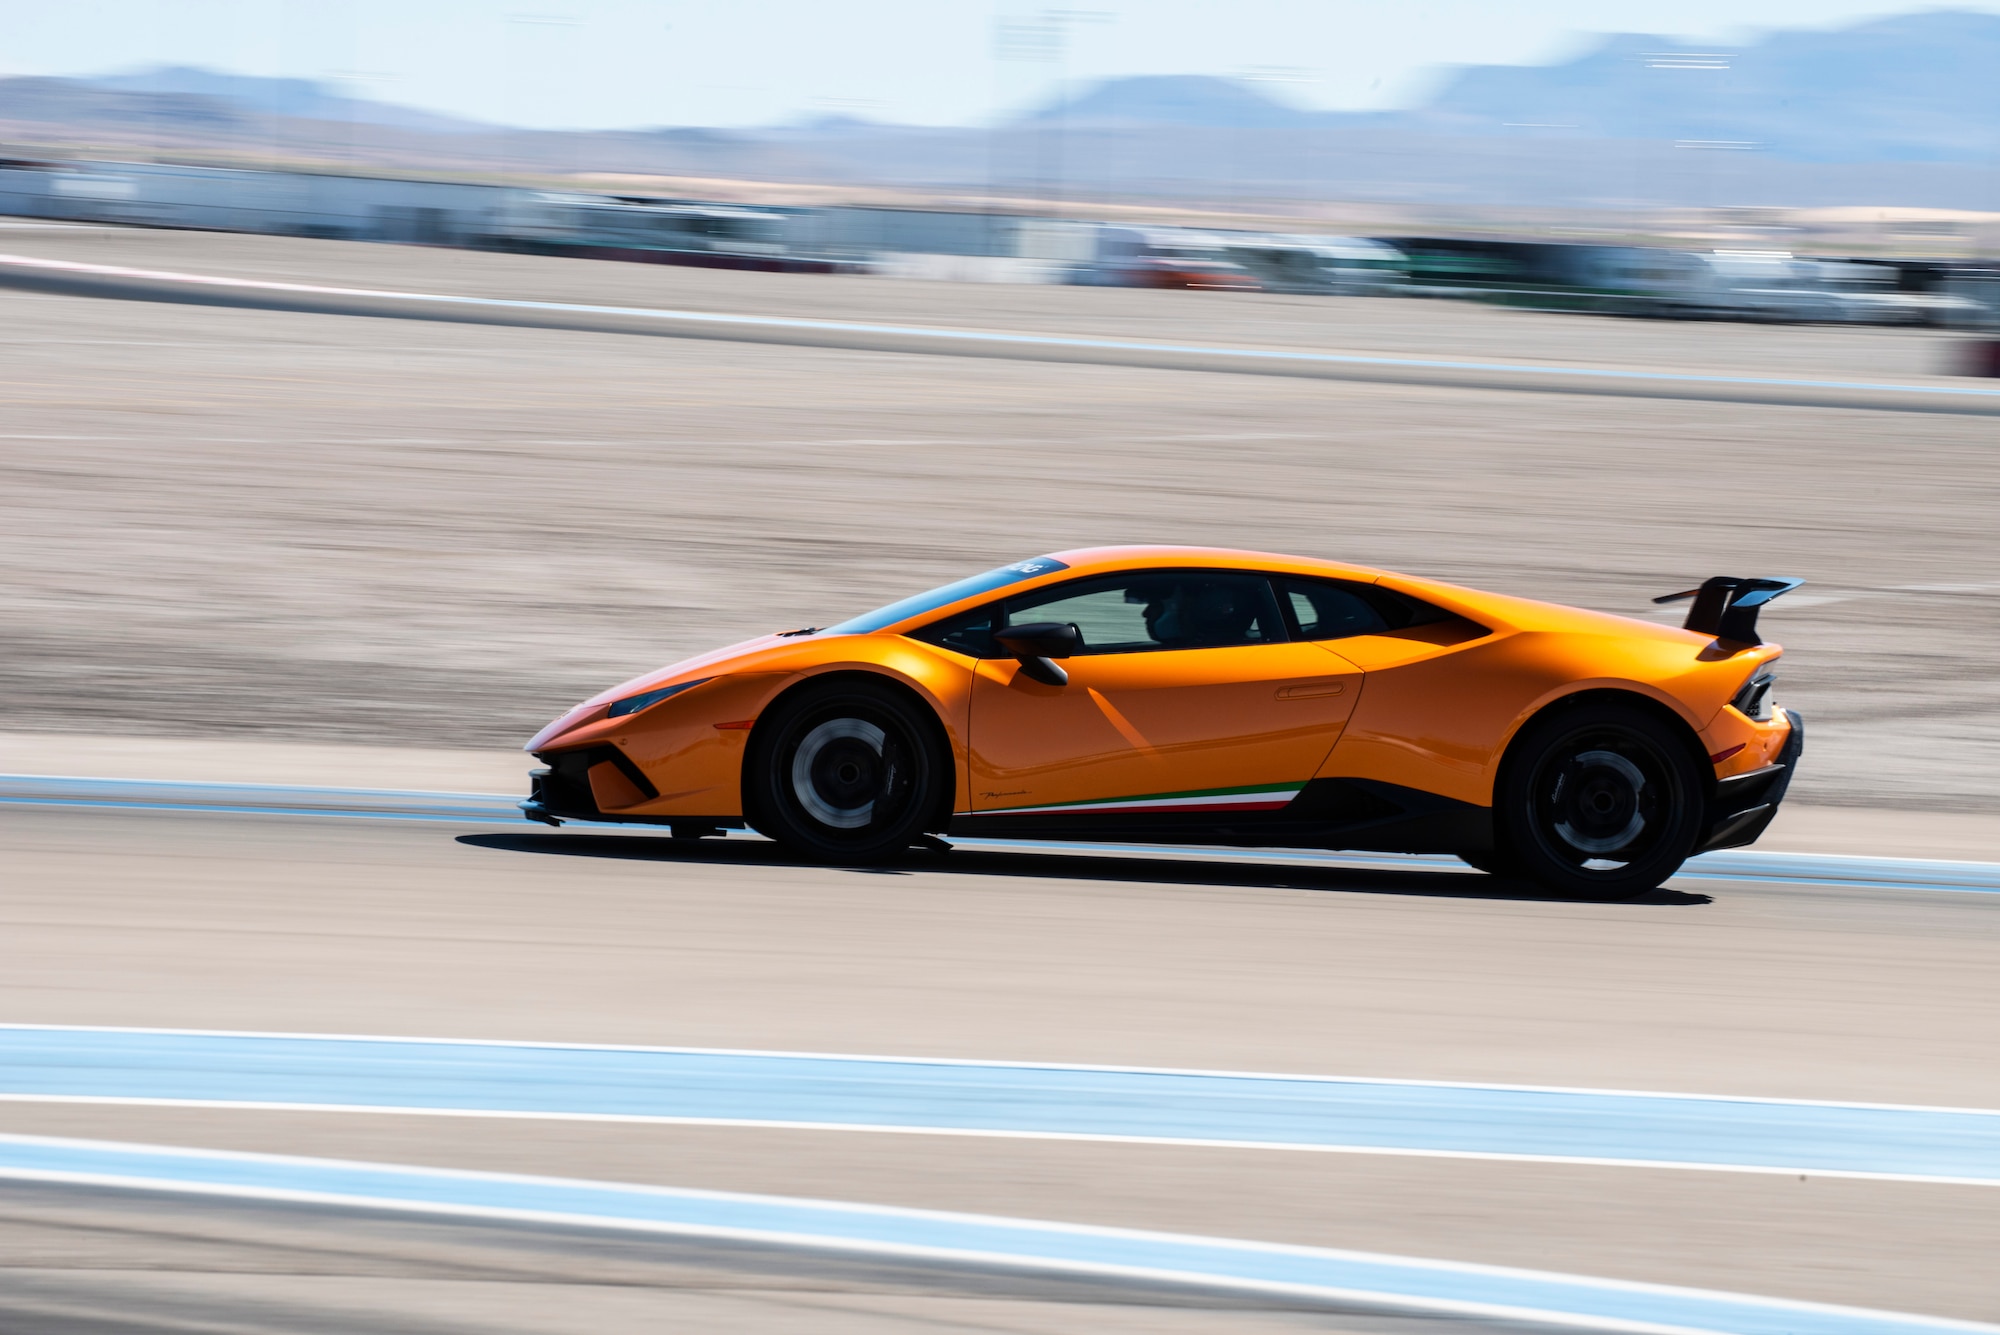 A Lamborghini racing on a track in Las Vegas